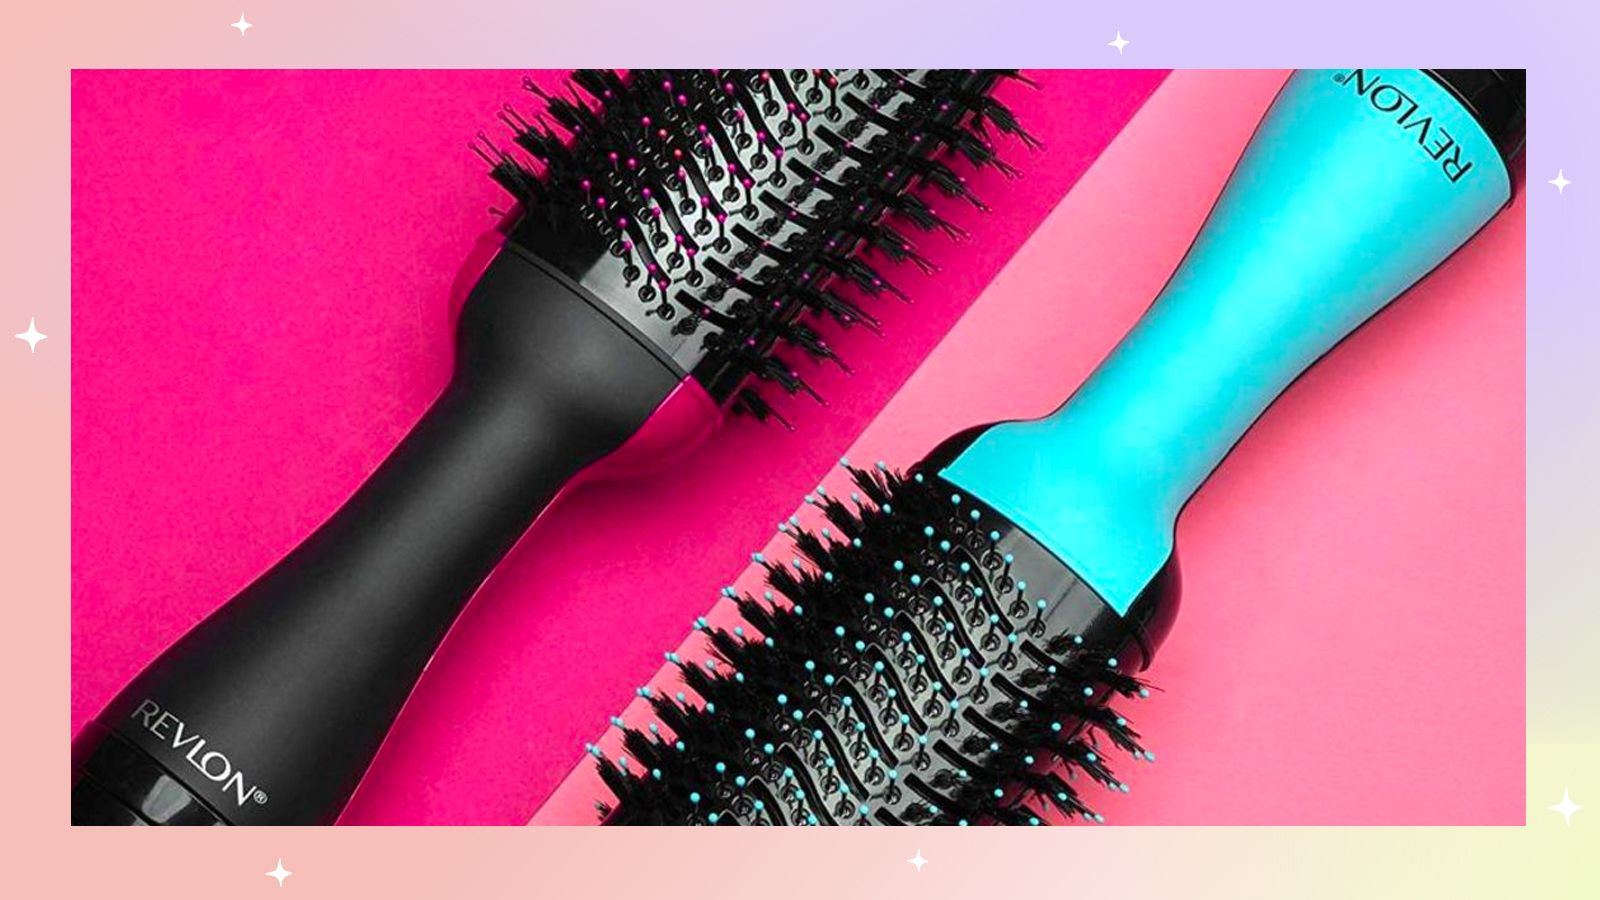 Revlon One-Step hair dryer Black Friday sale at Target | CNN Underscored